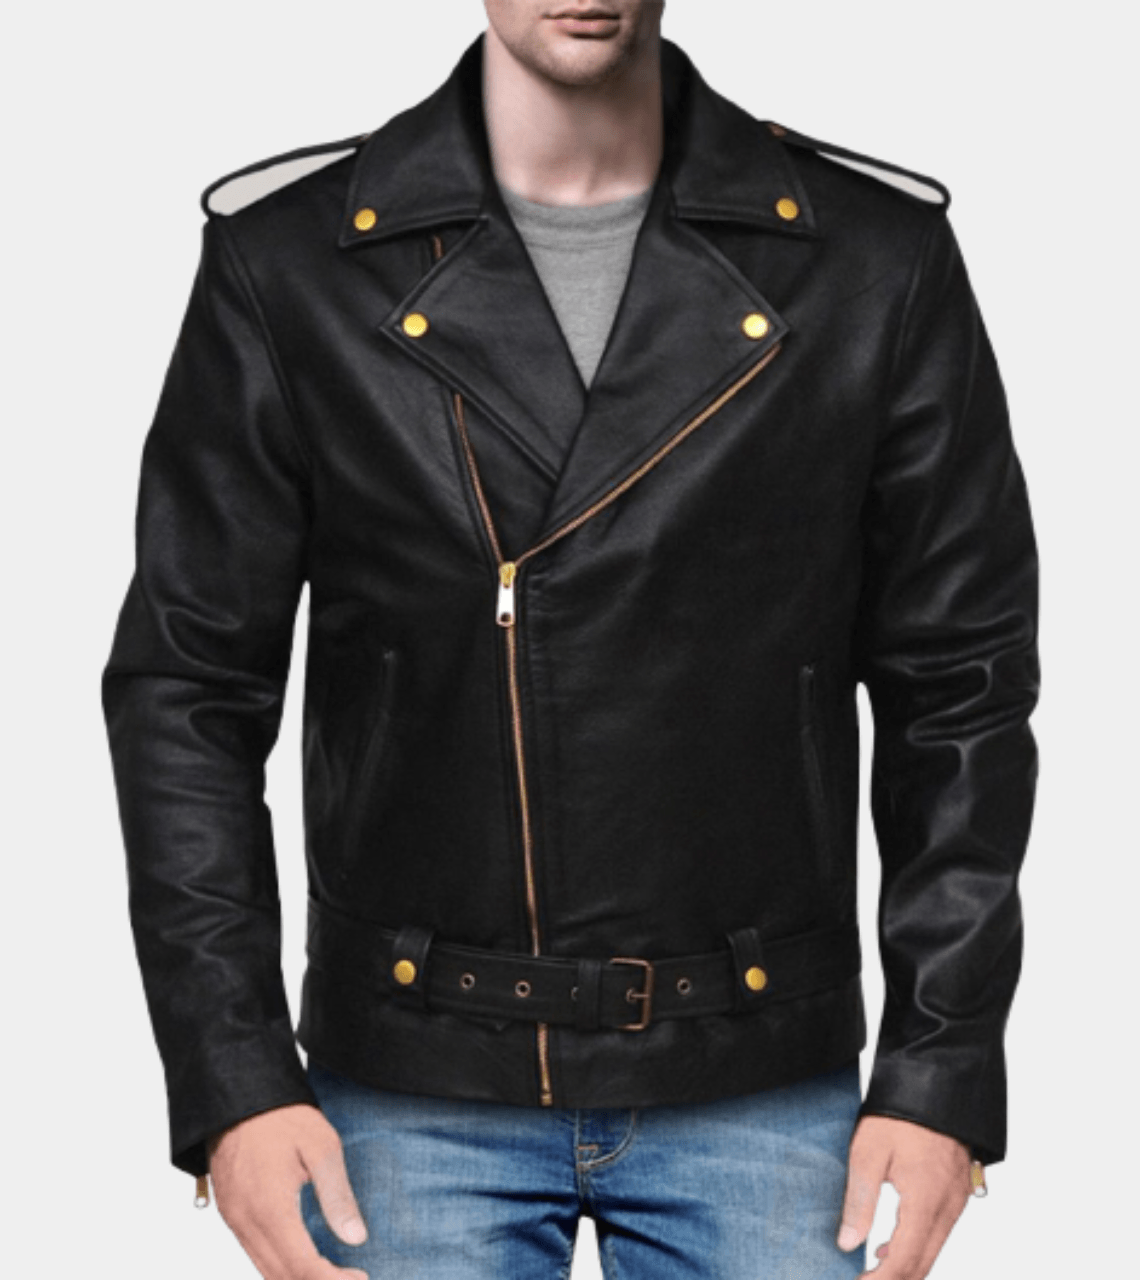 Johnny Depp Cry Baby Brando Leather Jacket